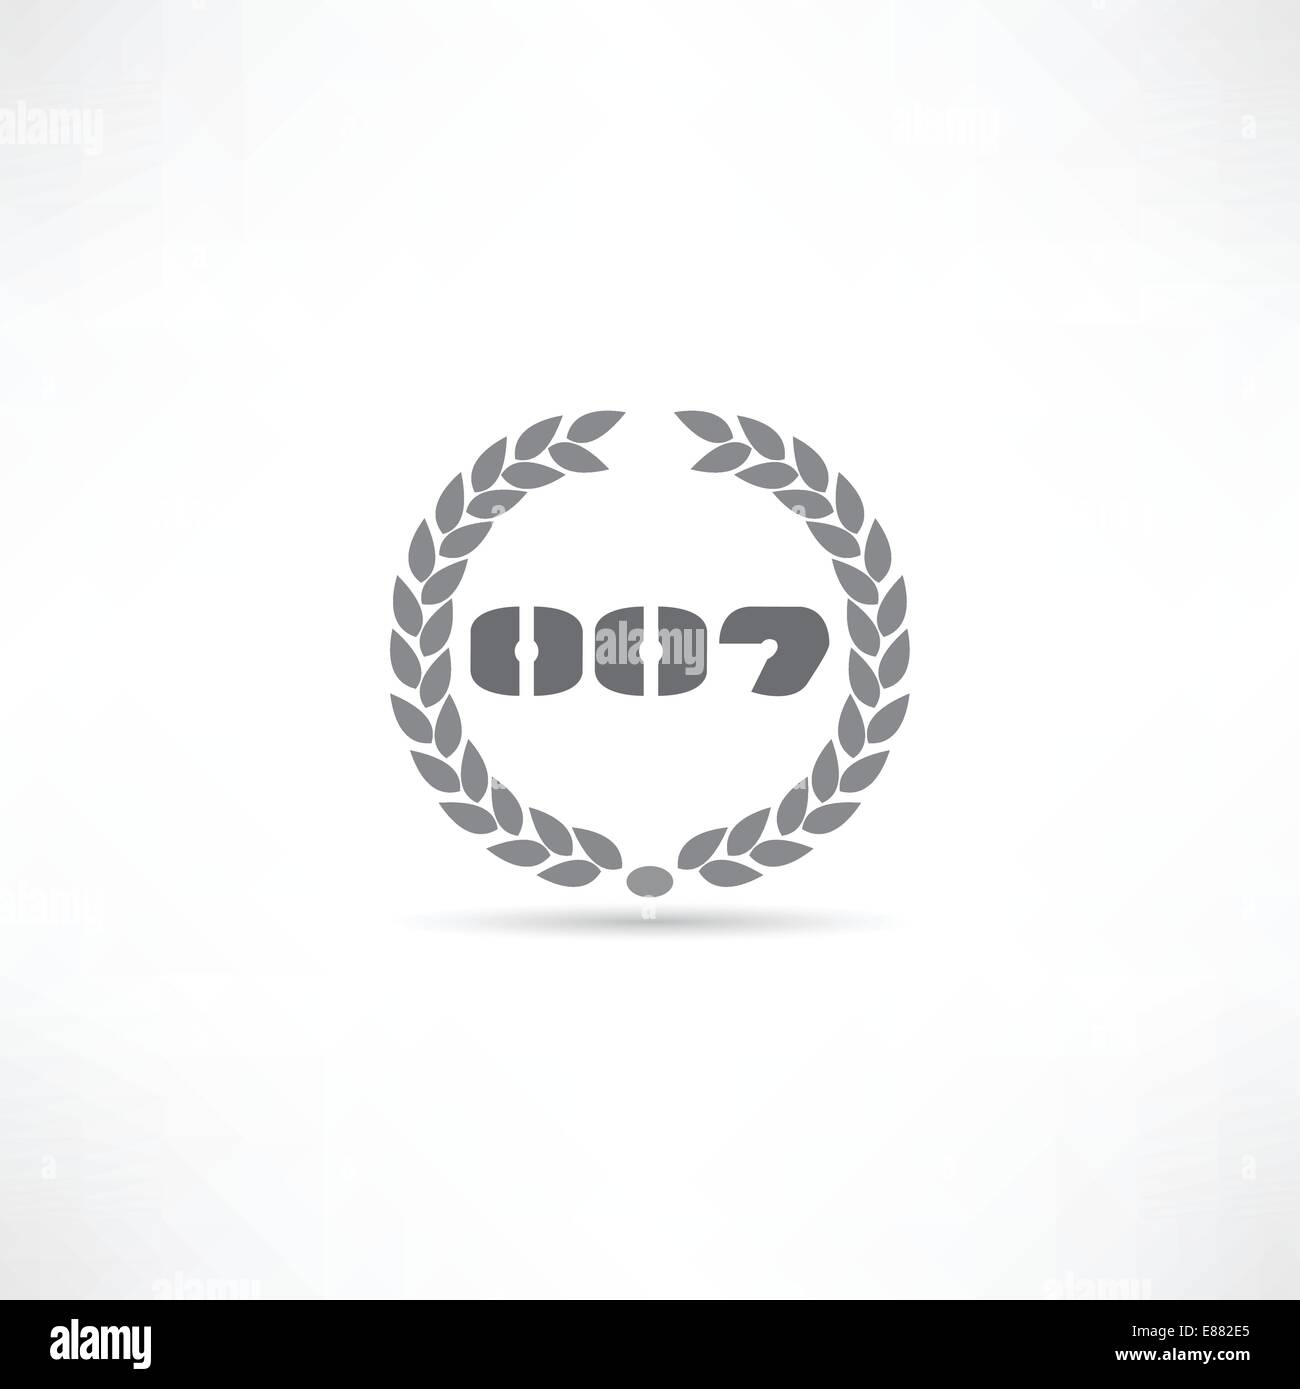 007 James Bond Logo